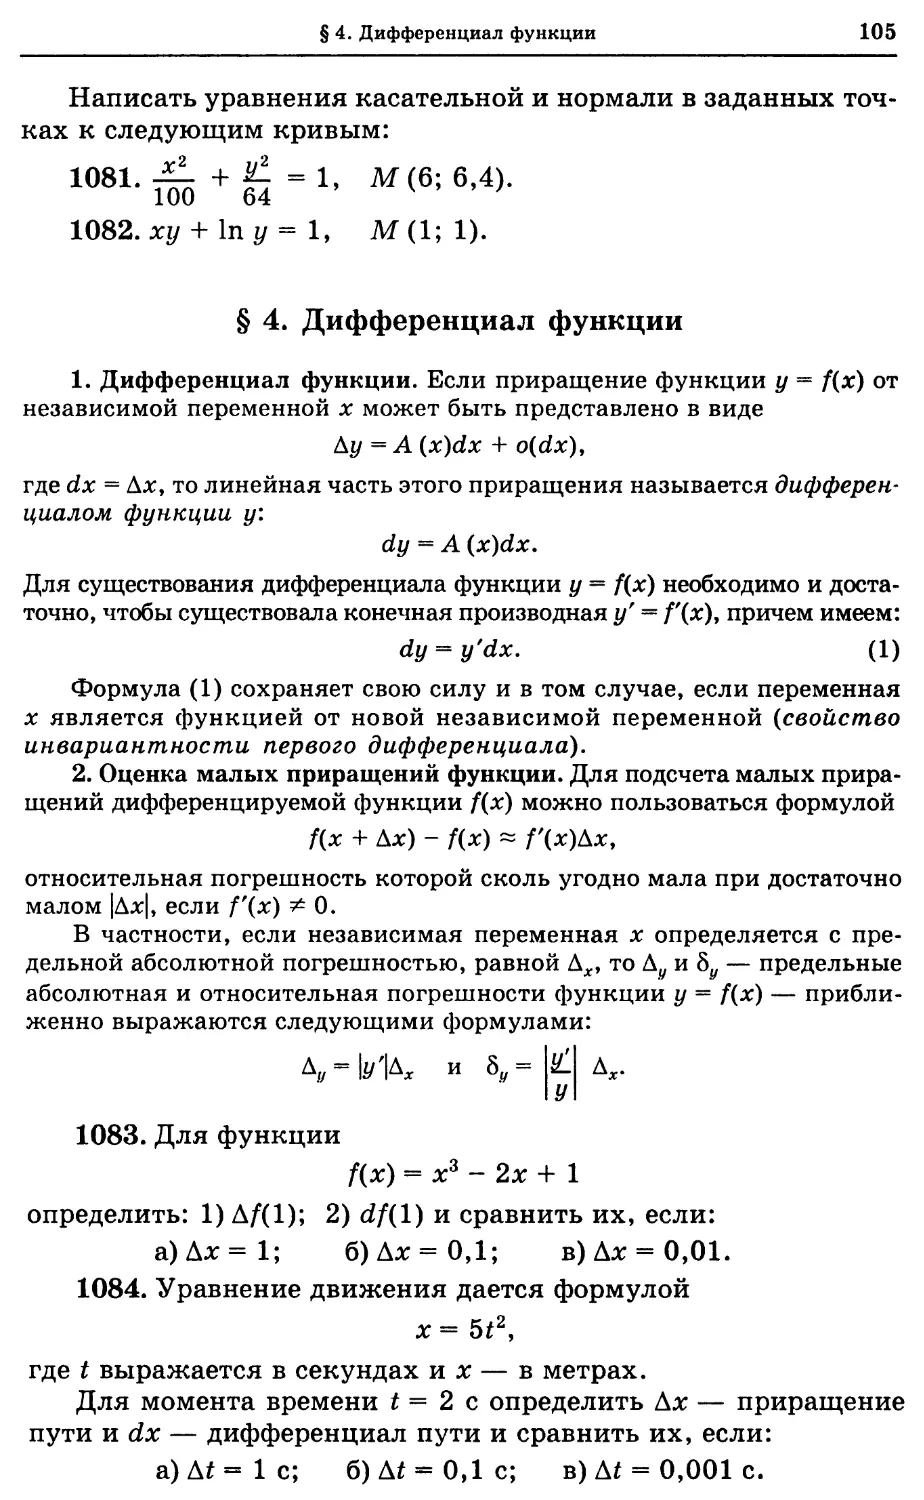 §4. Дифференциал функции